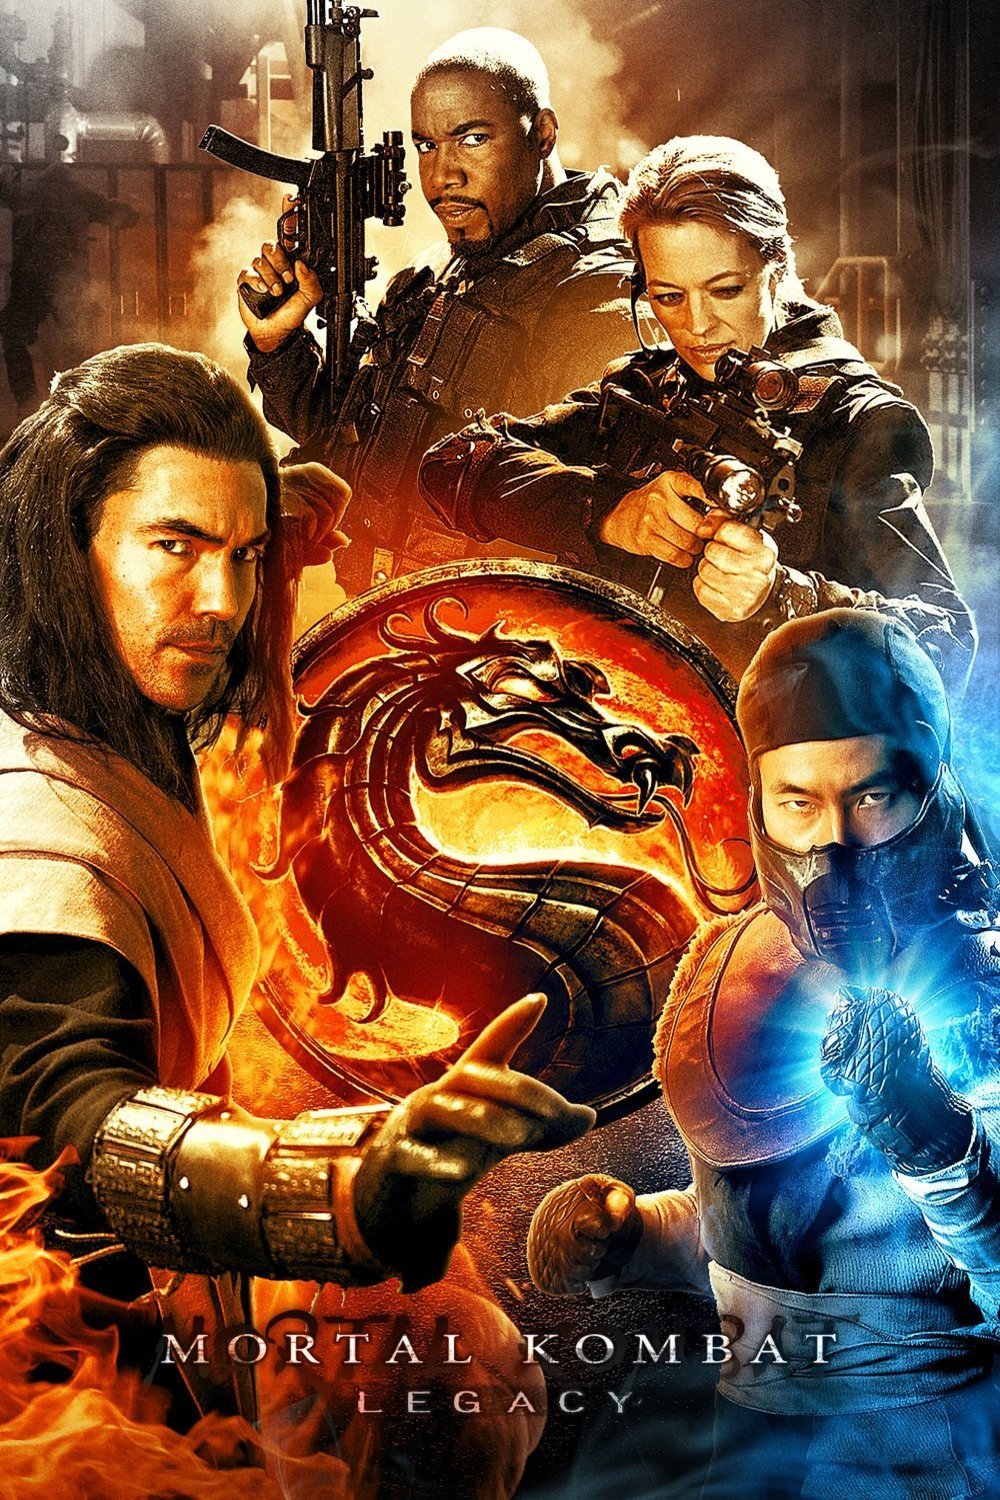 Poster of the movie Mortal Kombat